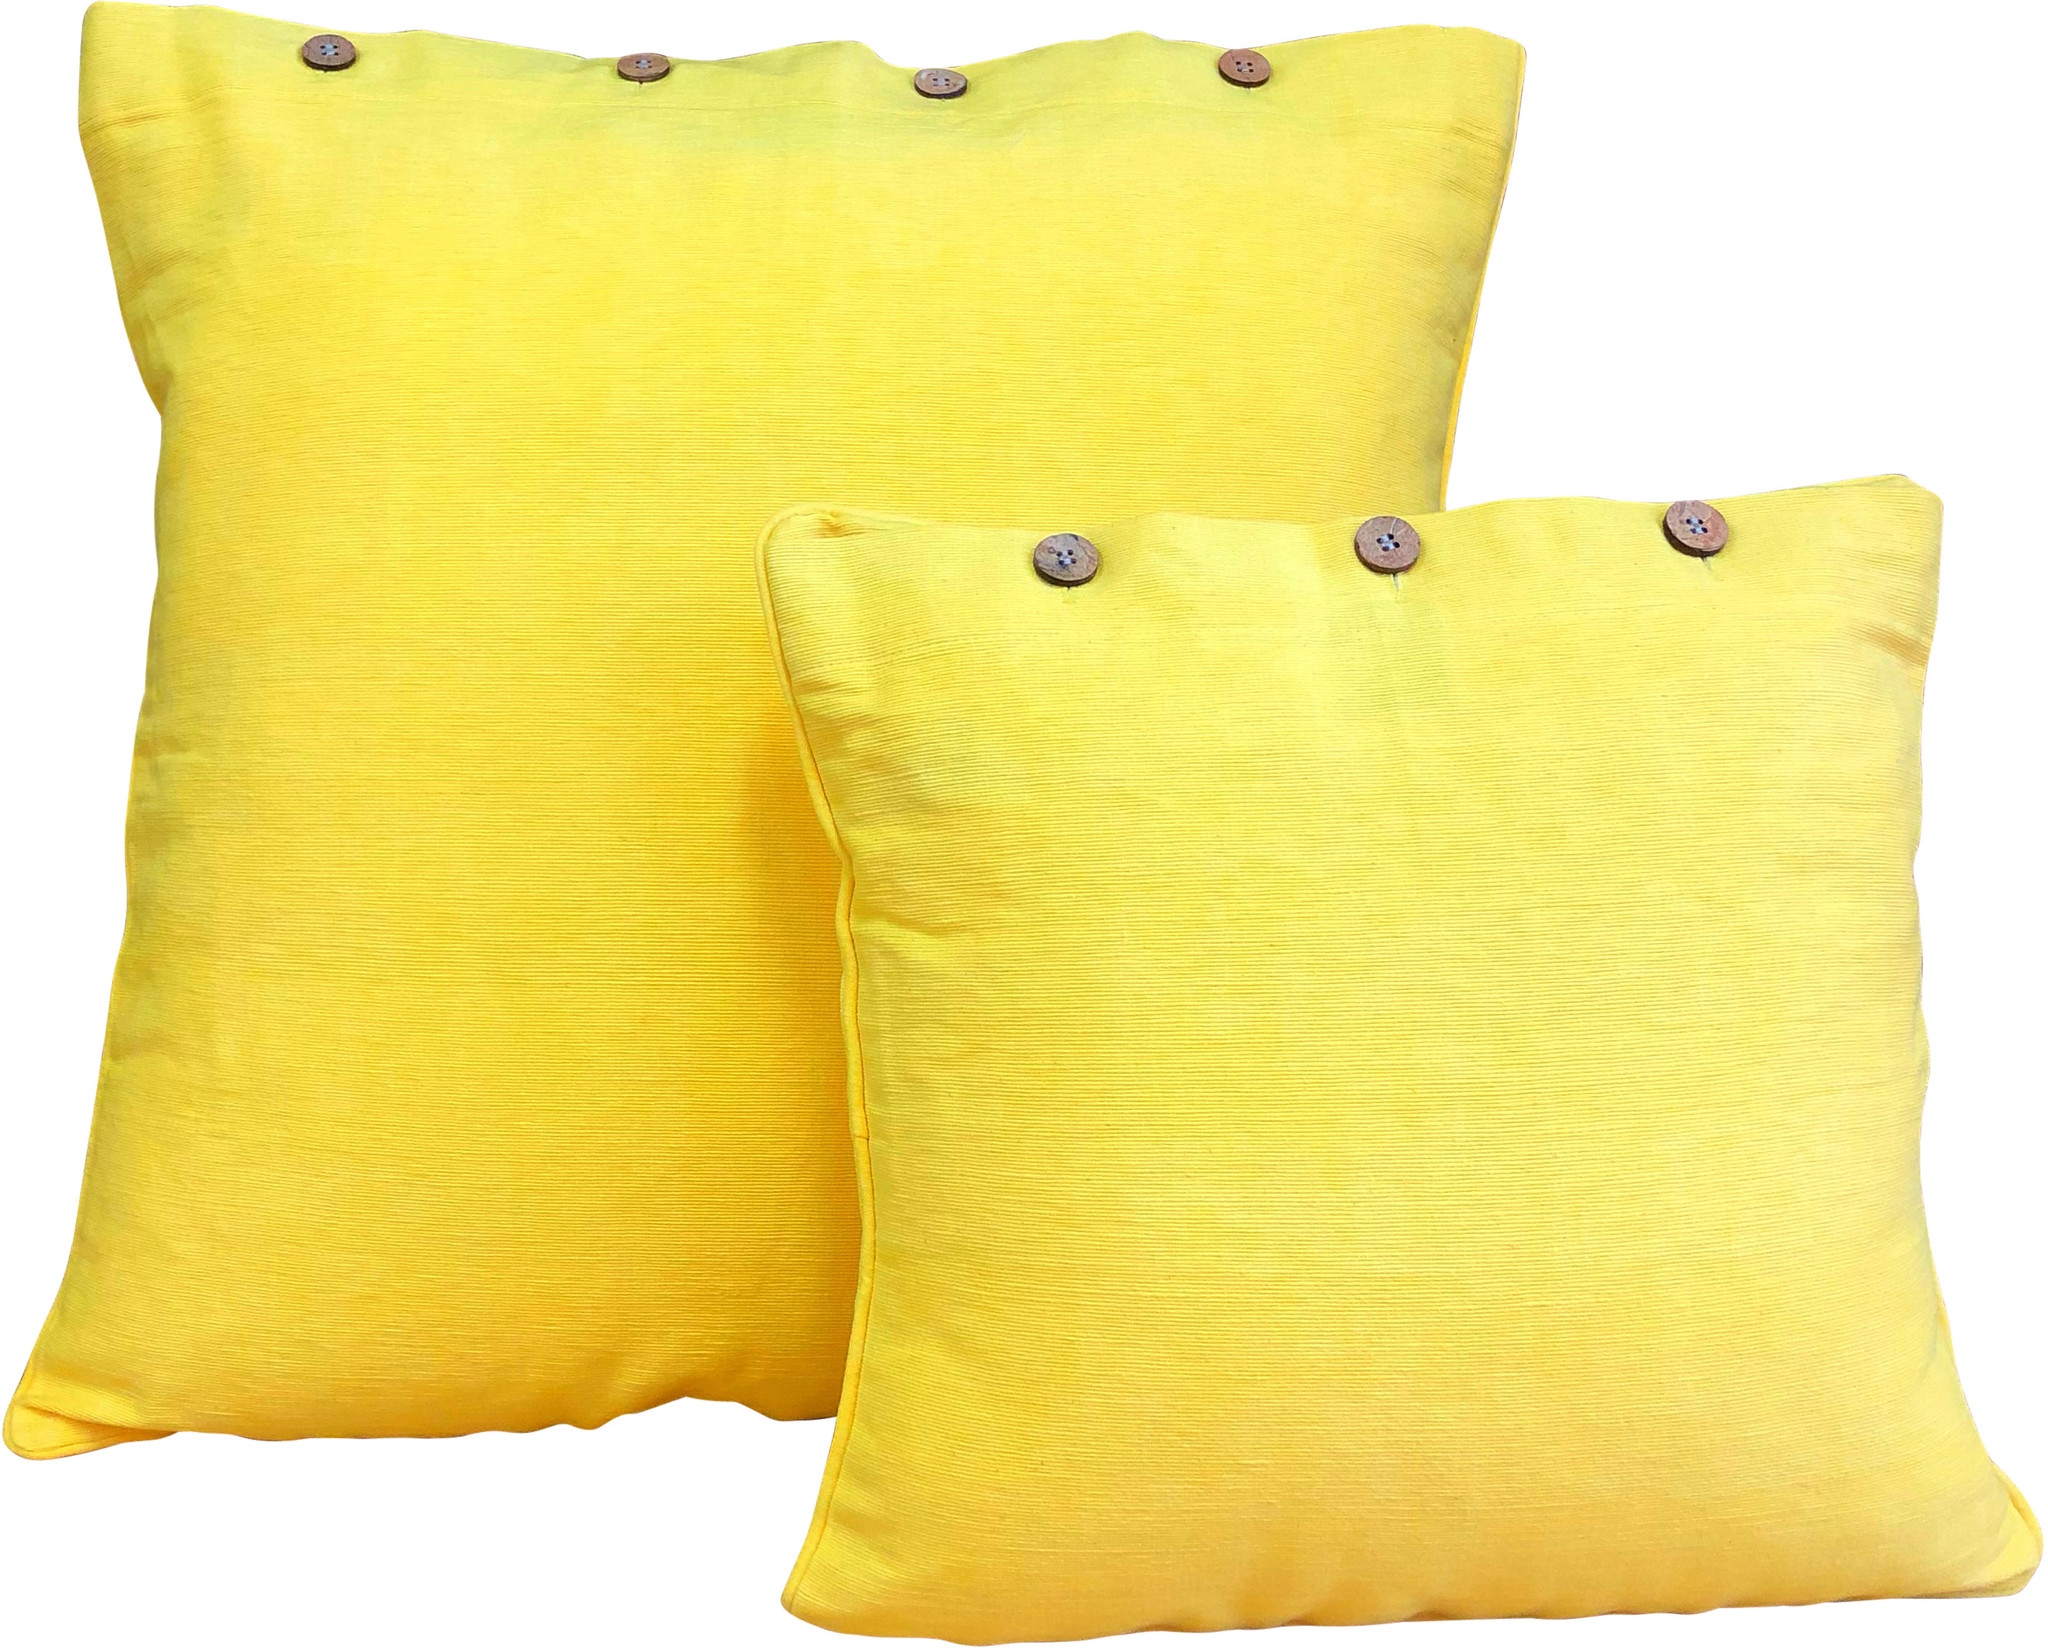 Craft Studio Cushion Cover - Yellow